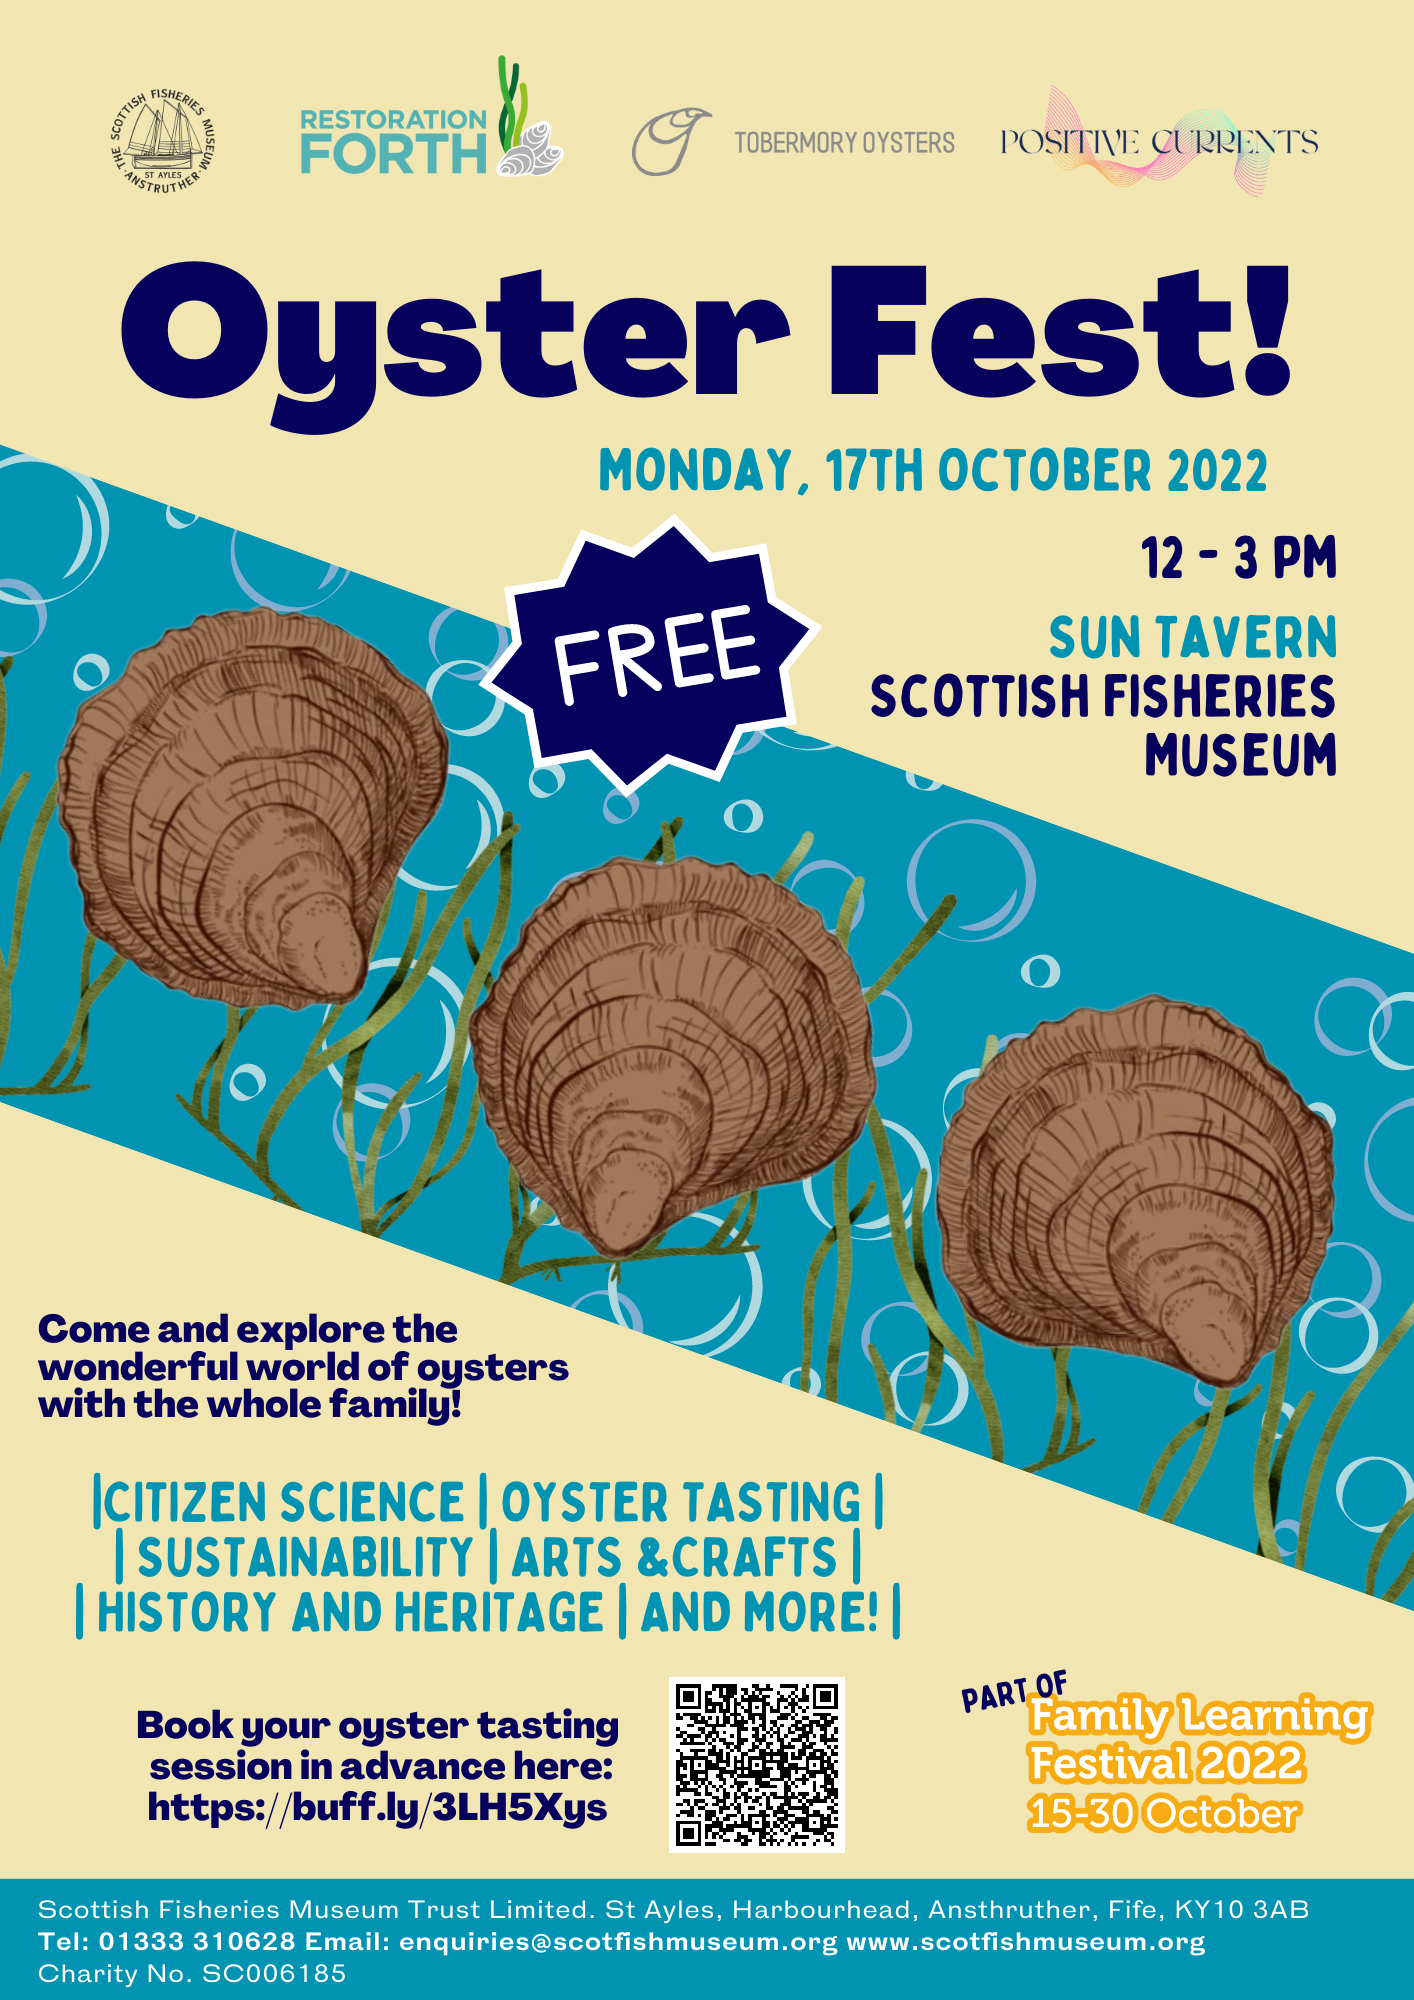 Oyster Fest!